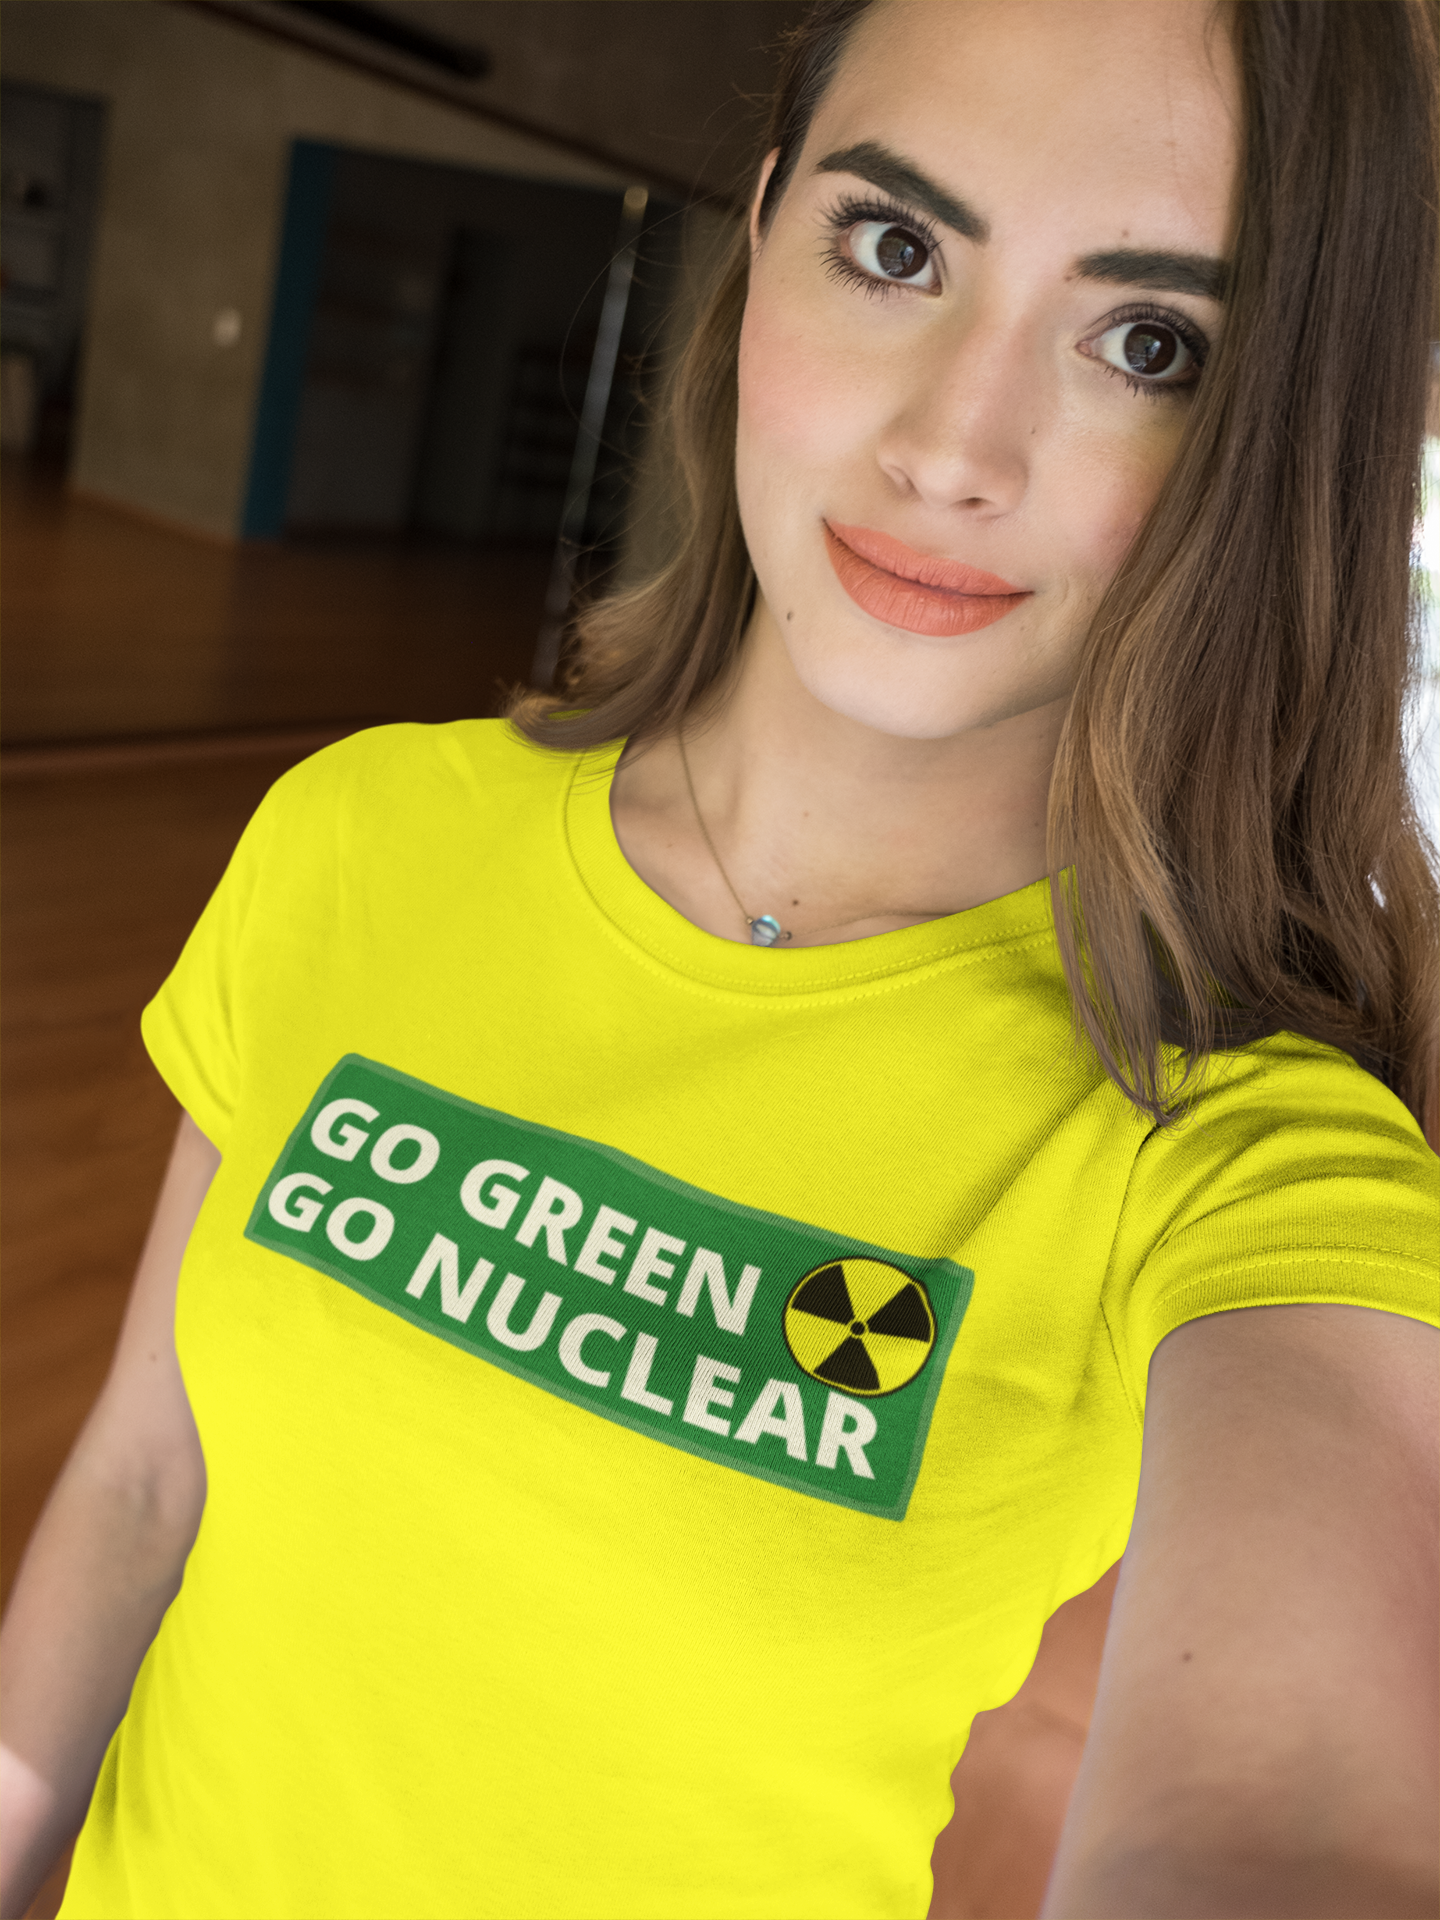 Go Green Go Nuclear T-Shirt Women